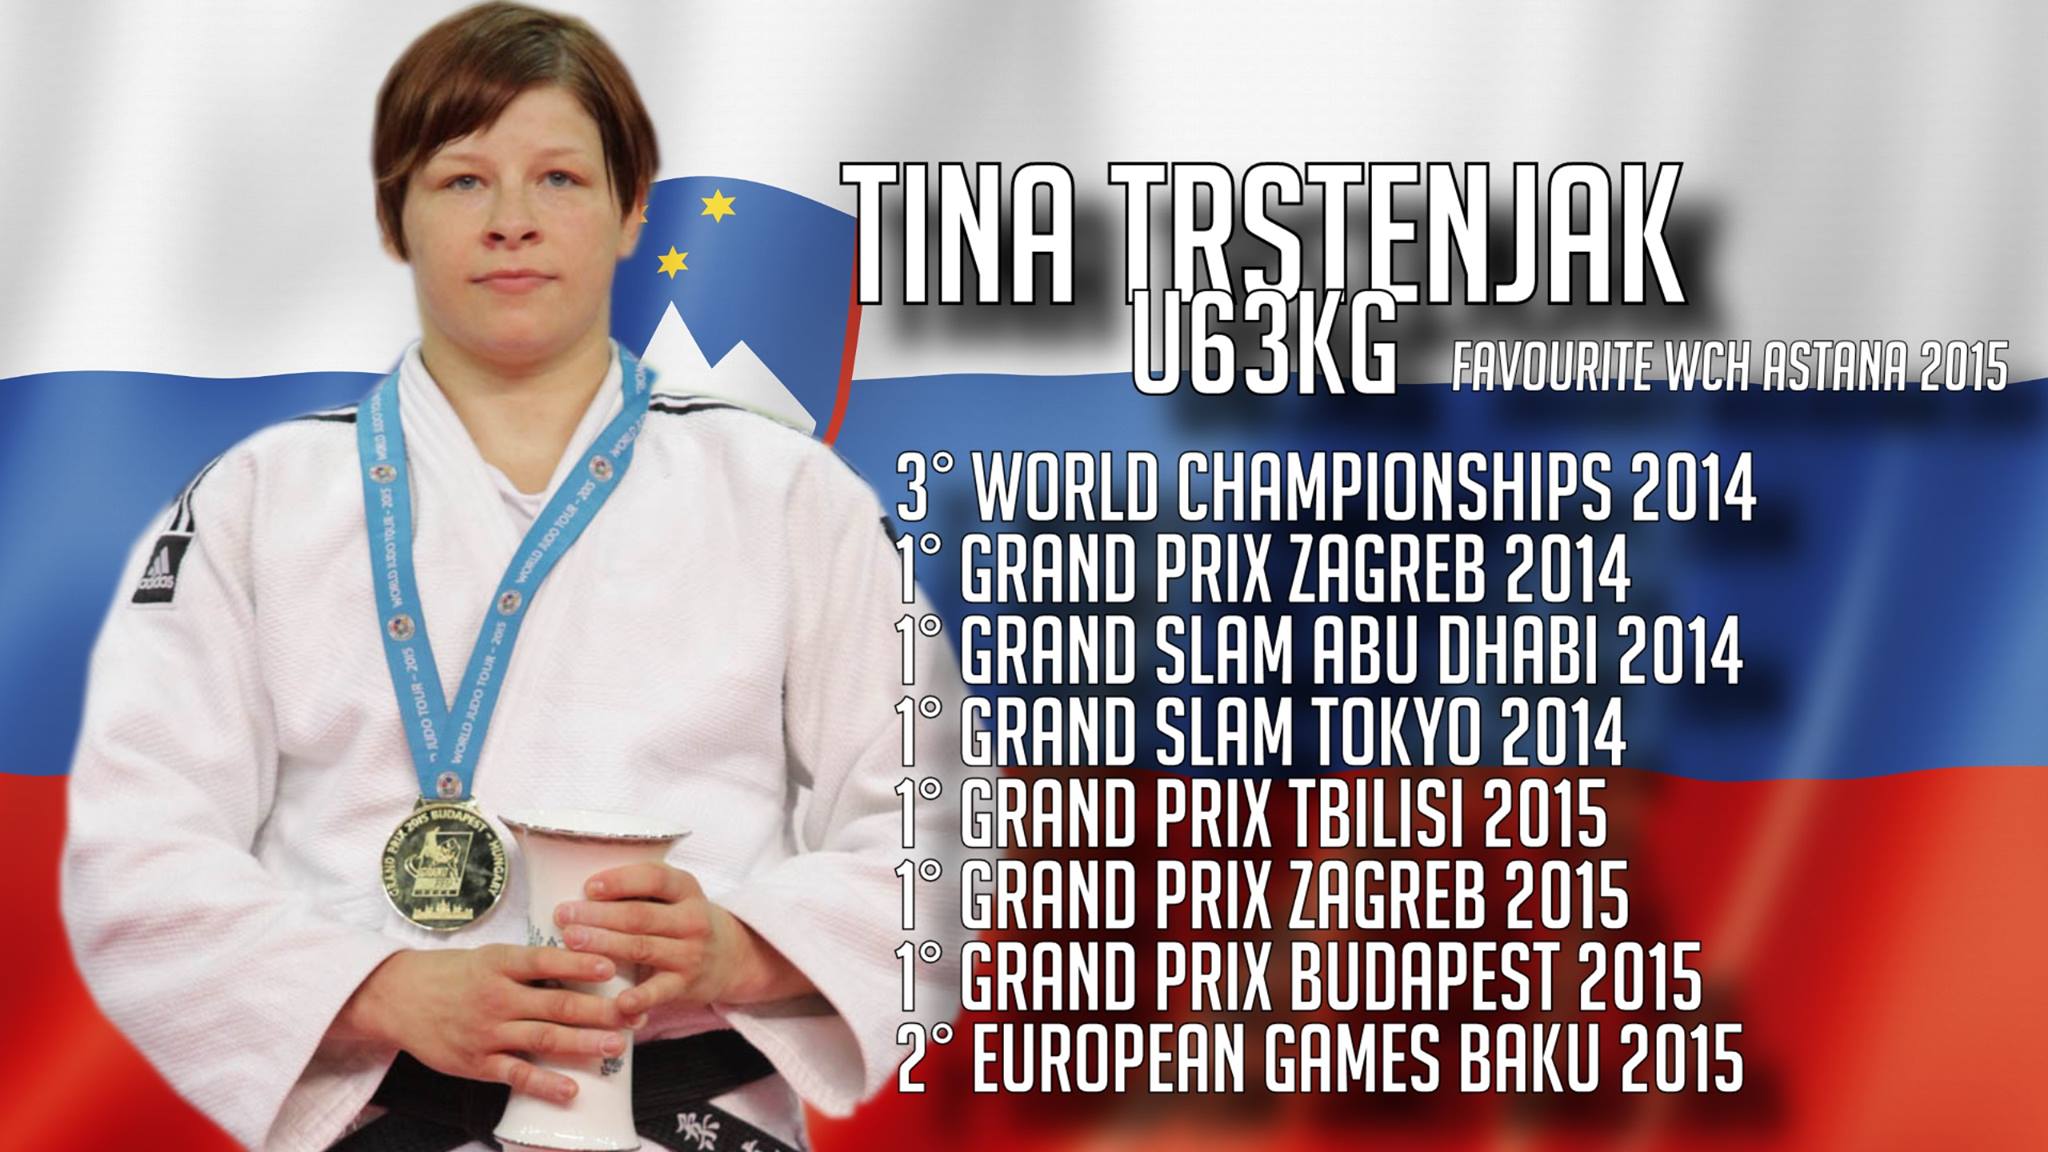 Tina Trstenjak